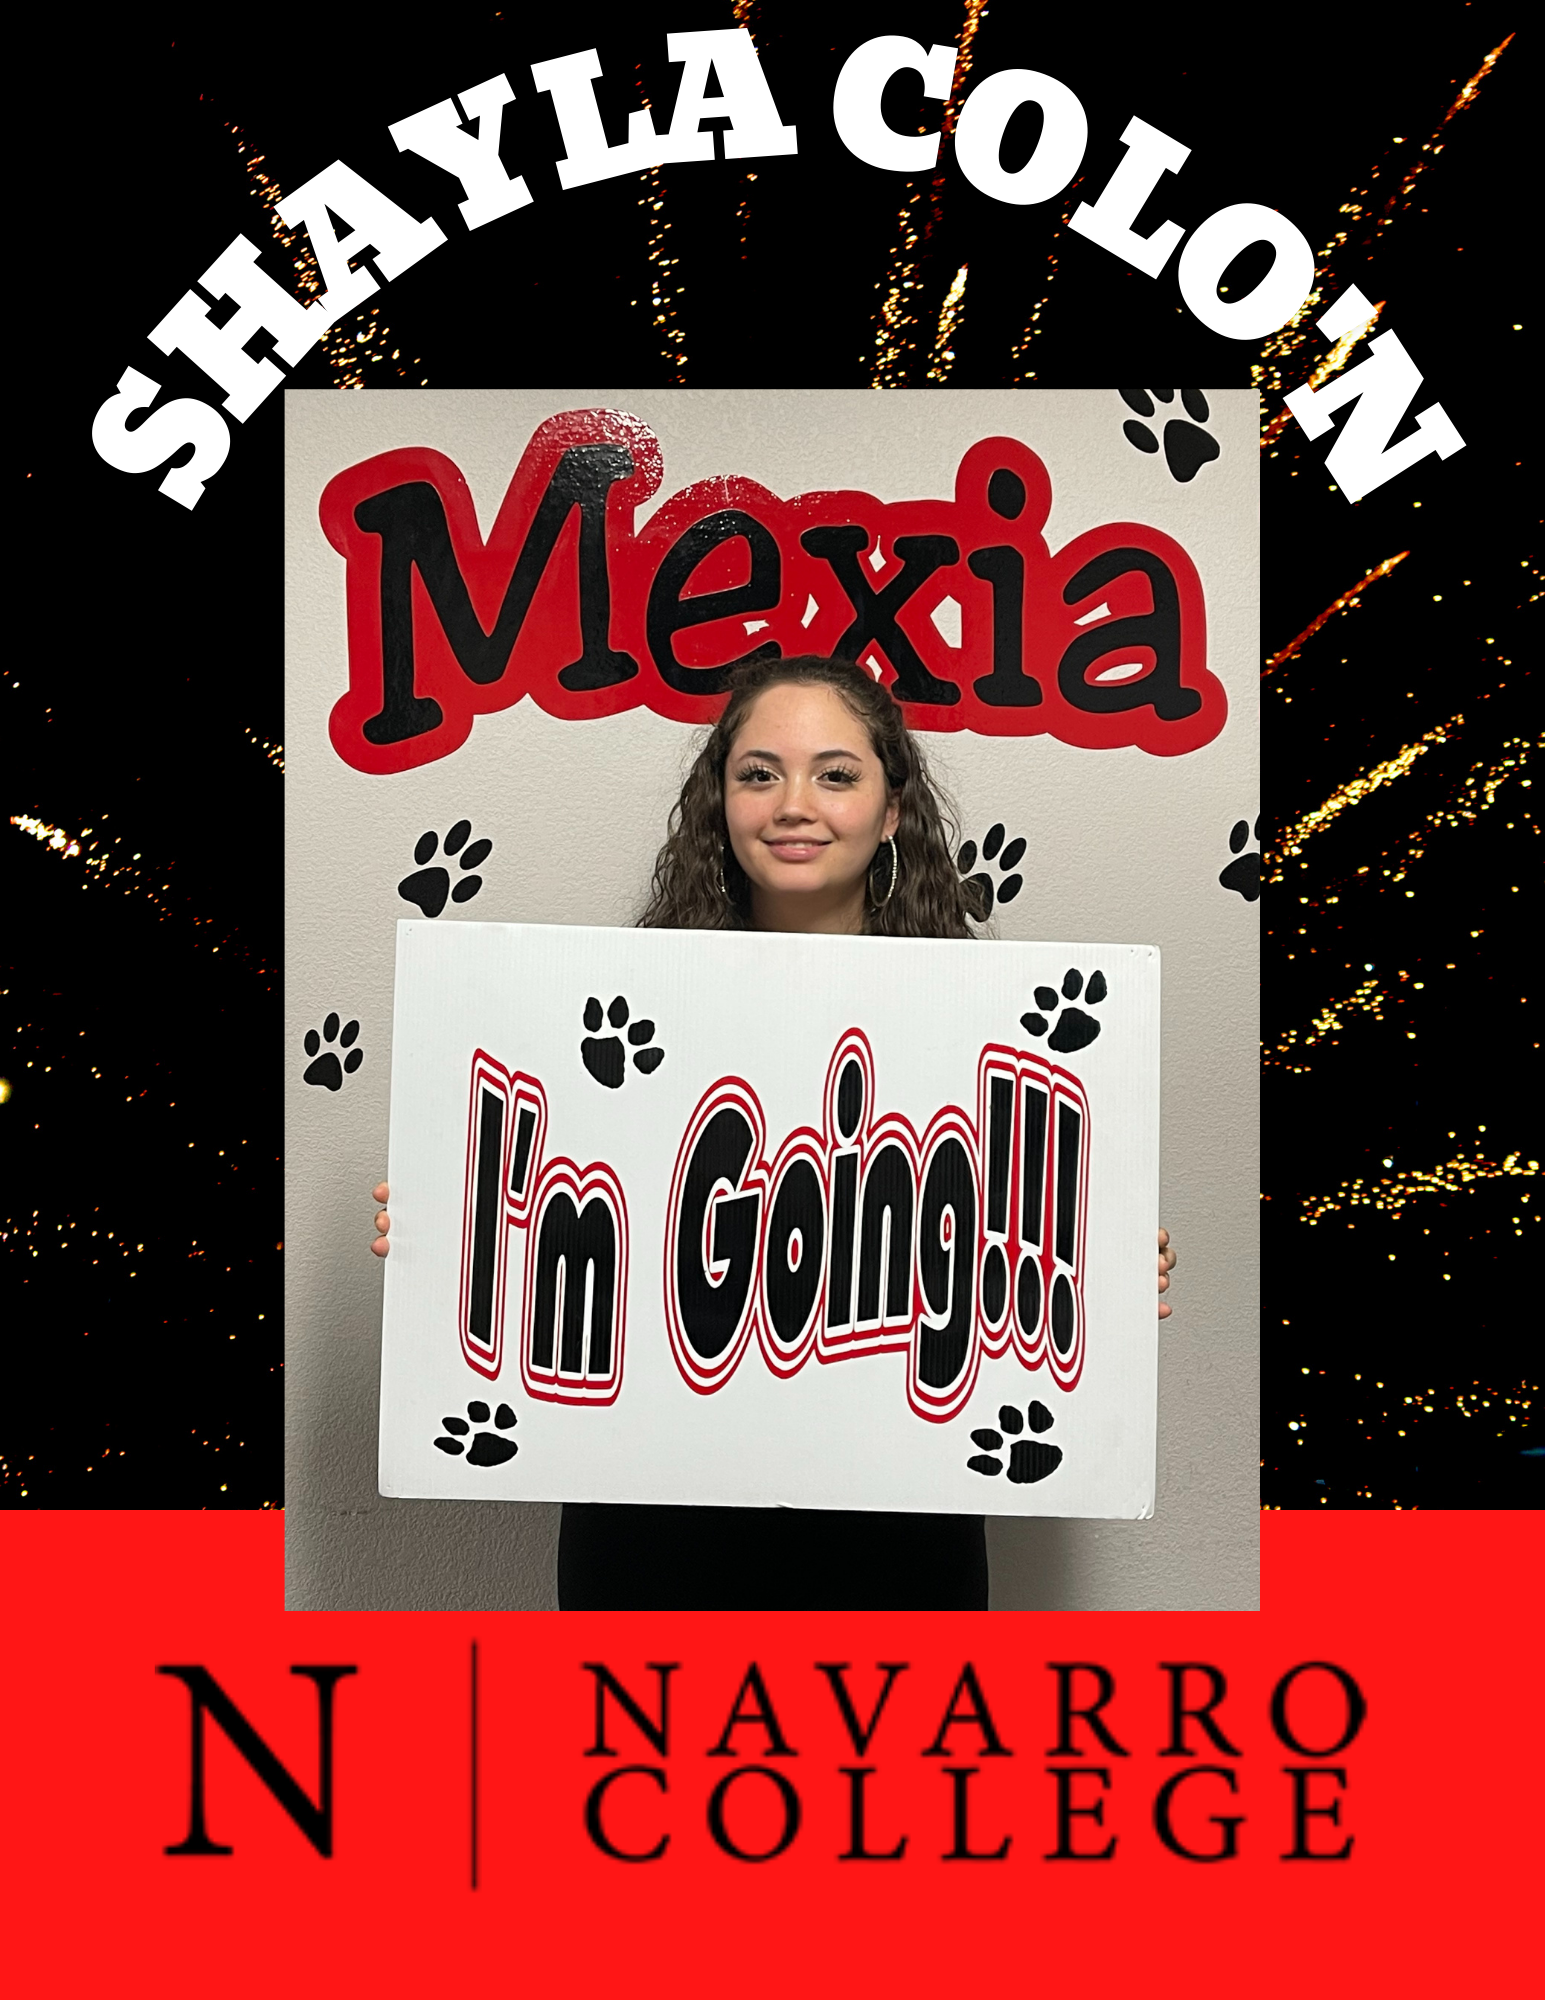 Shayla Colo'n - I'm Going! - Navarro College